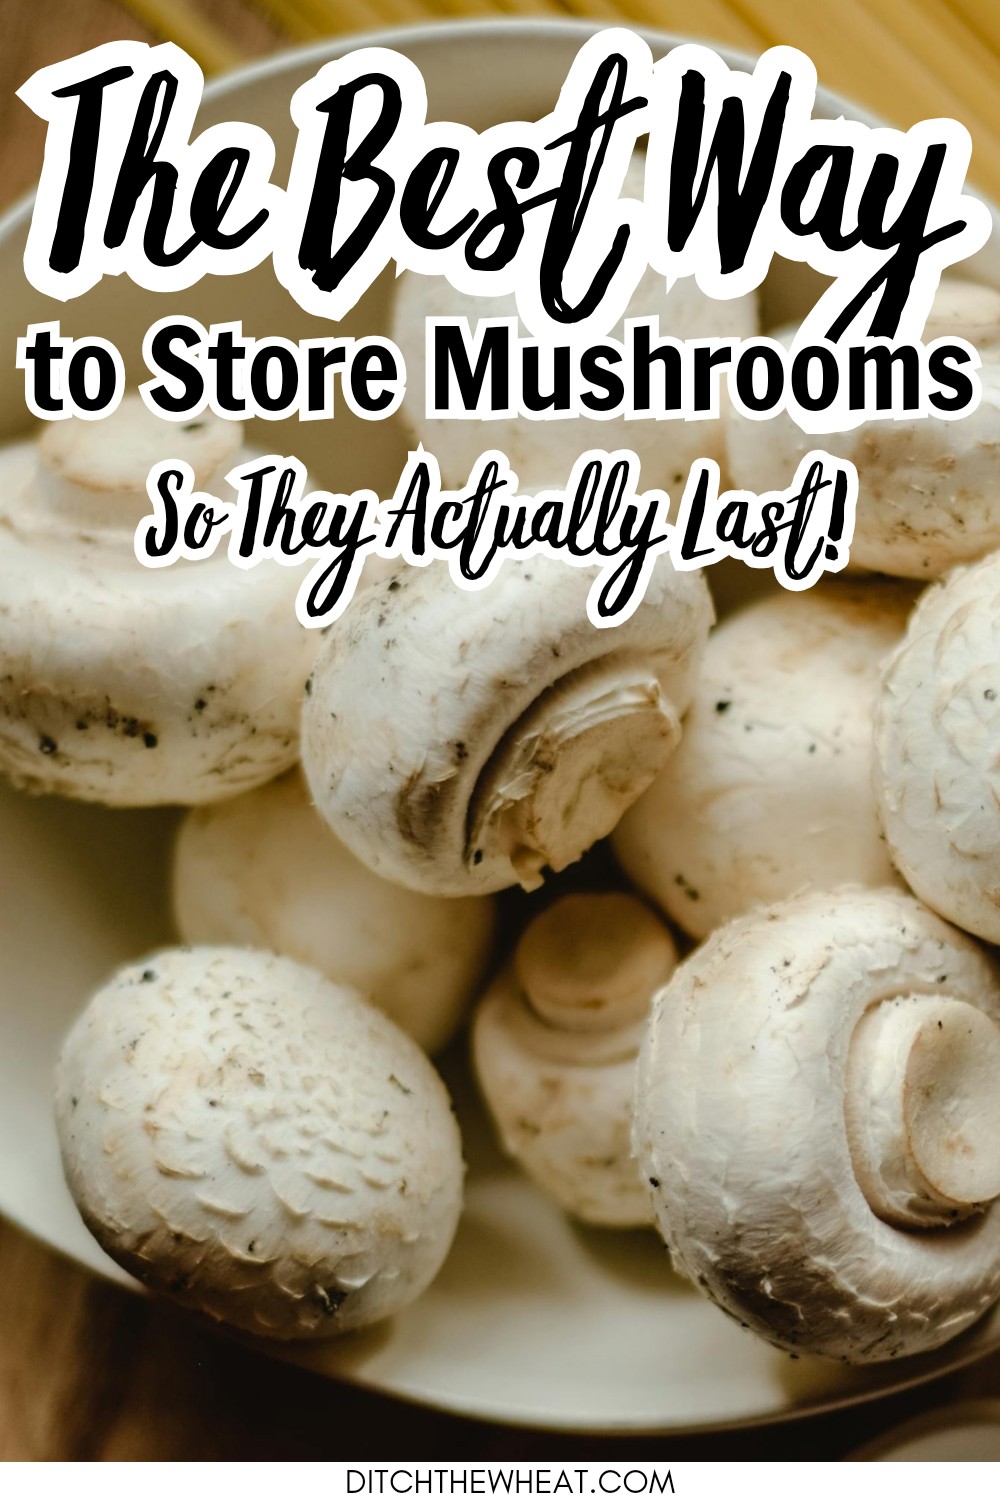 A bowl of mushrooms.